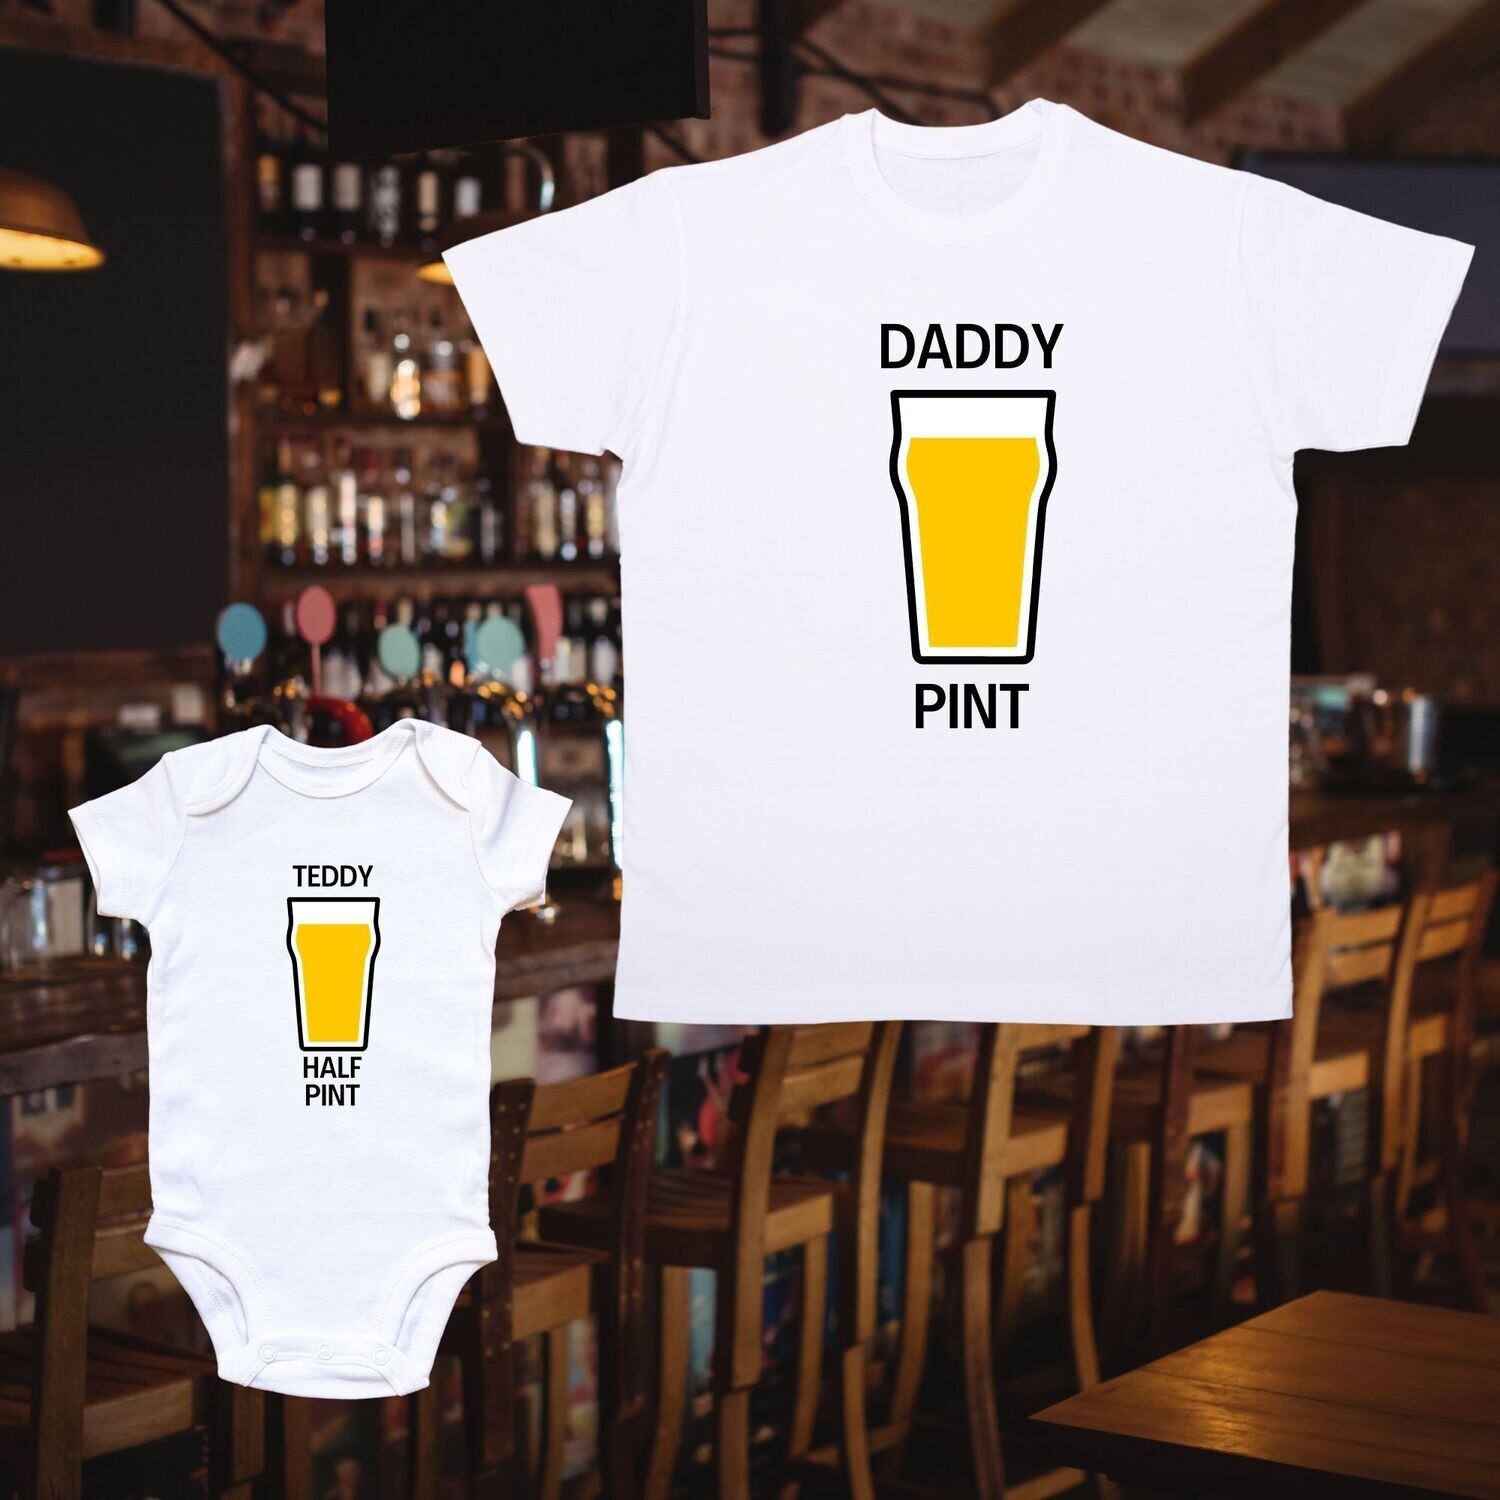 Pint & Half Pint, Father & Son Matching T-Shirts